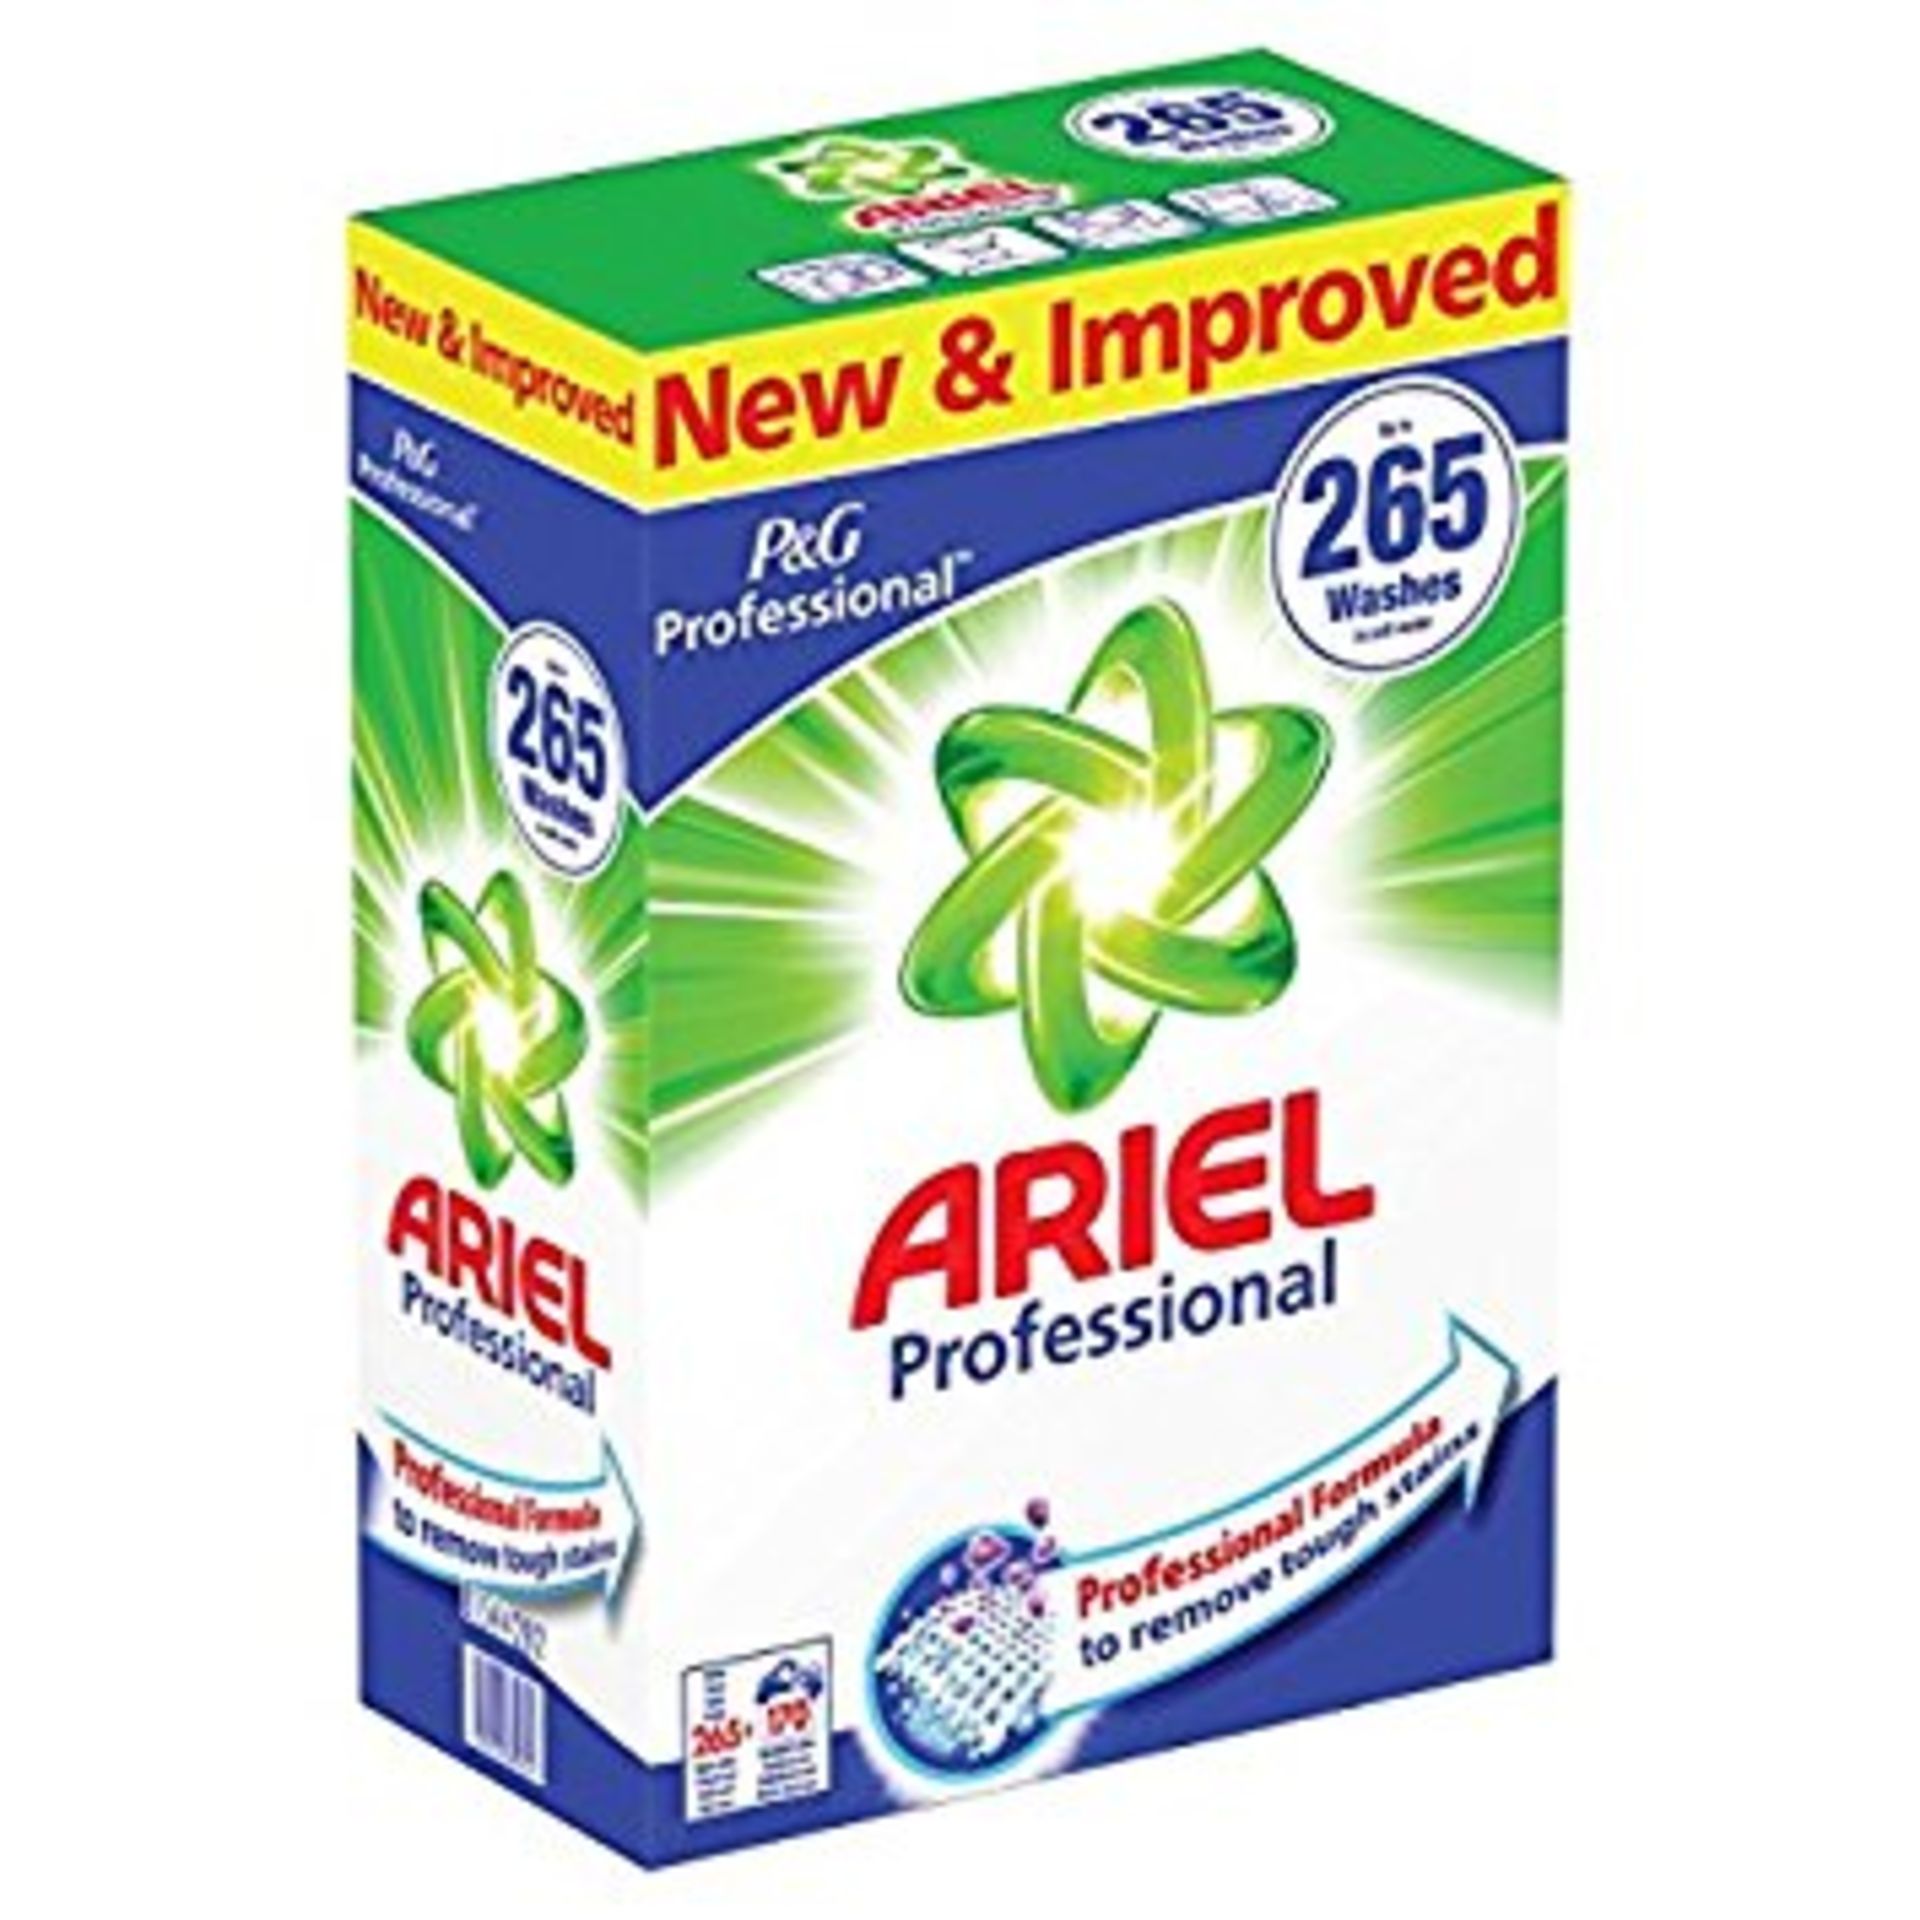 V *TRADE QTY* Brand New Ariel Professional XXL 265 Washes Washing Powder X 87 YOUR BID PRICE TO BE